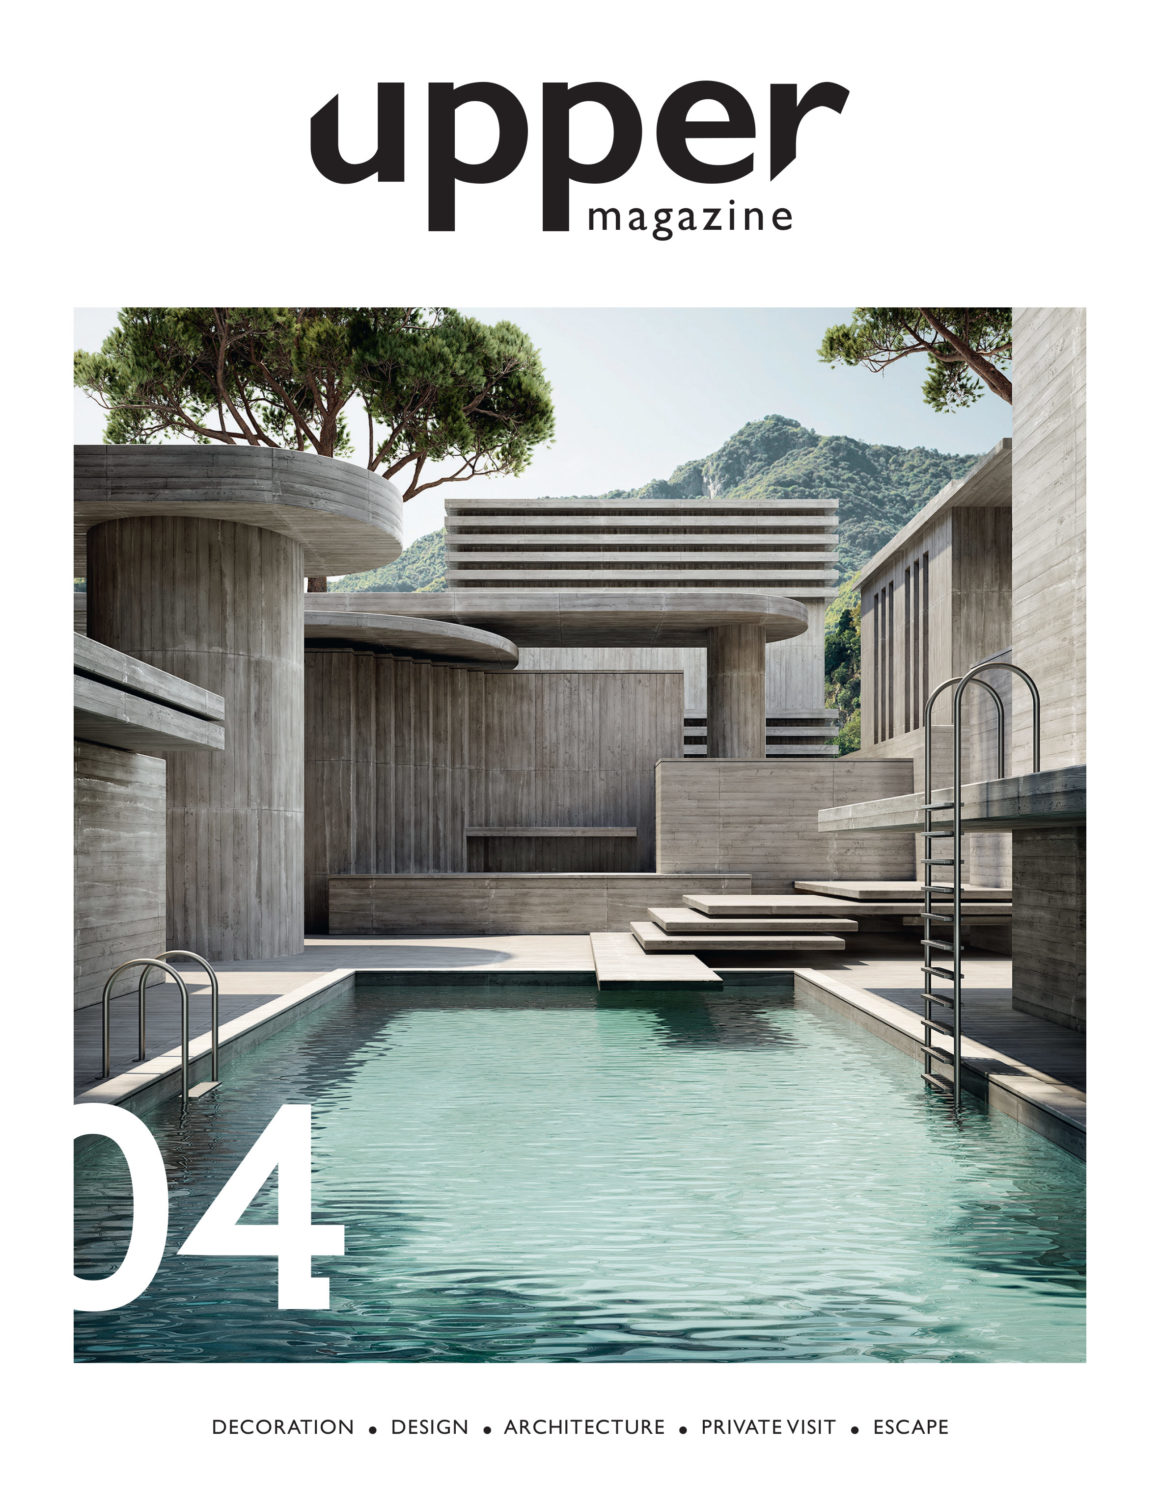 Upper magazine #4